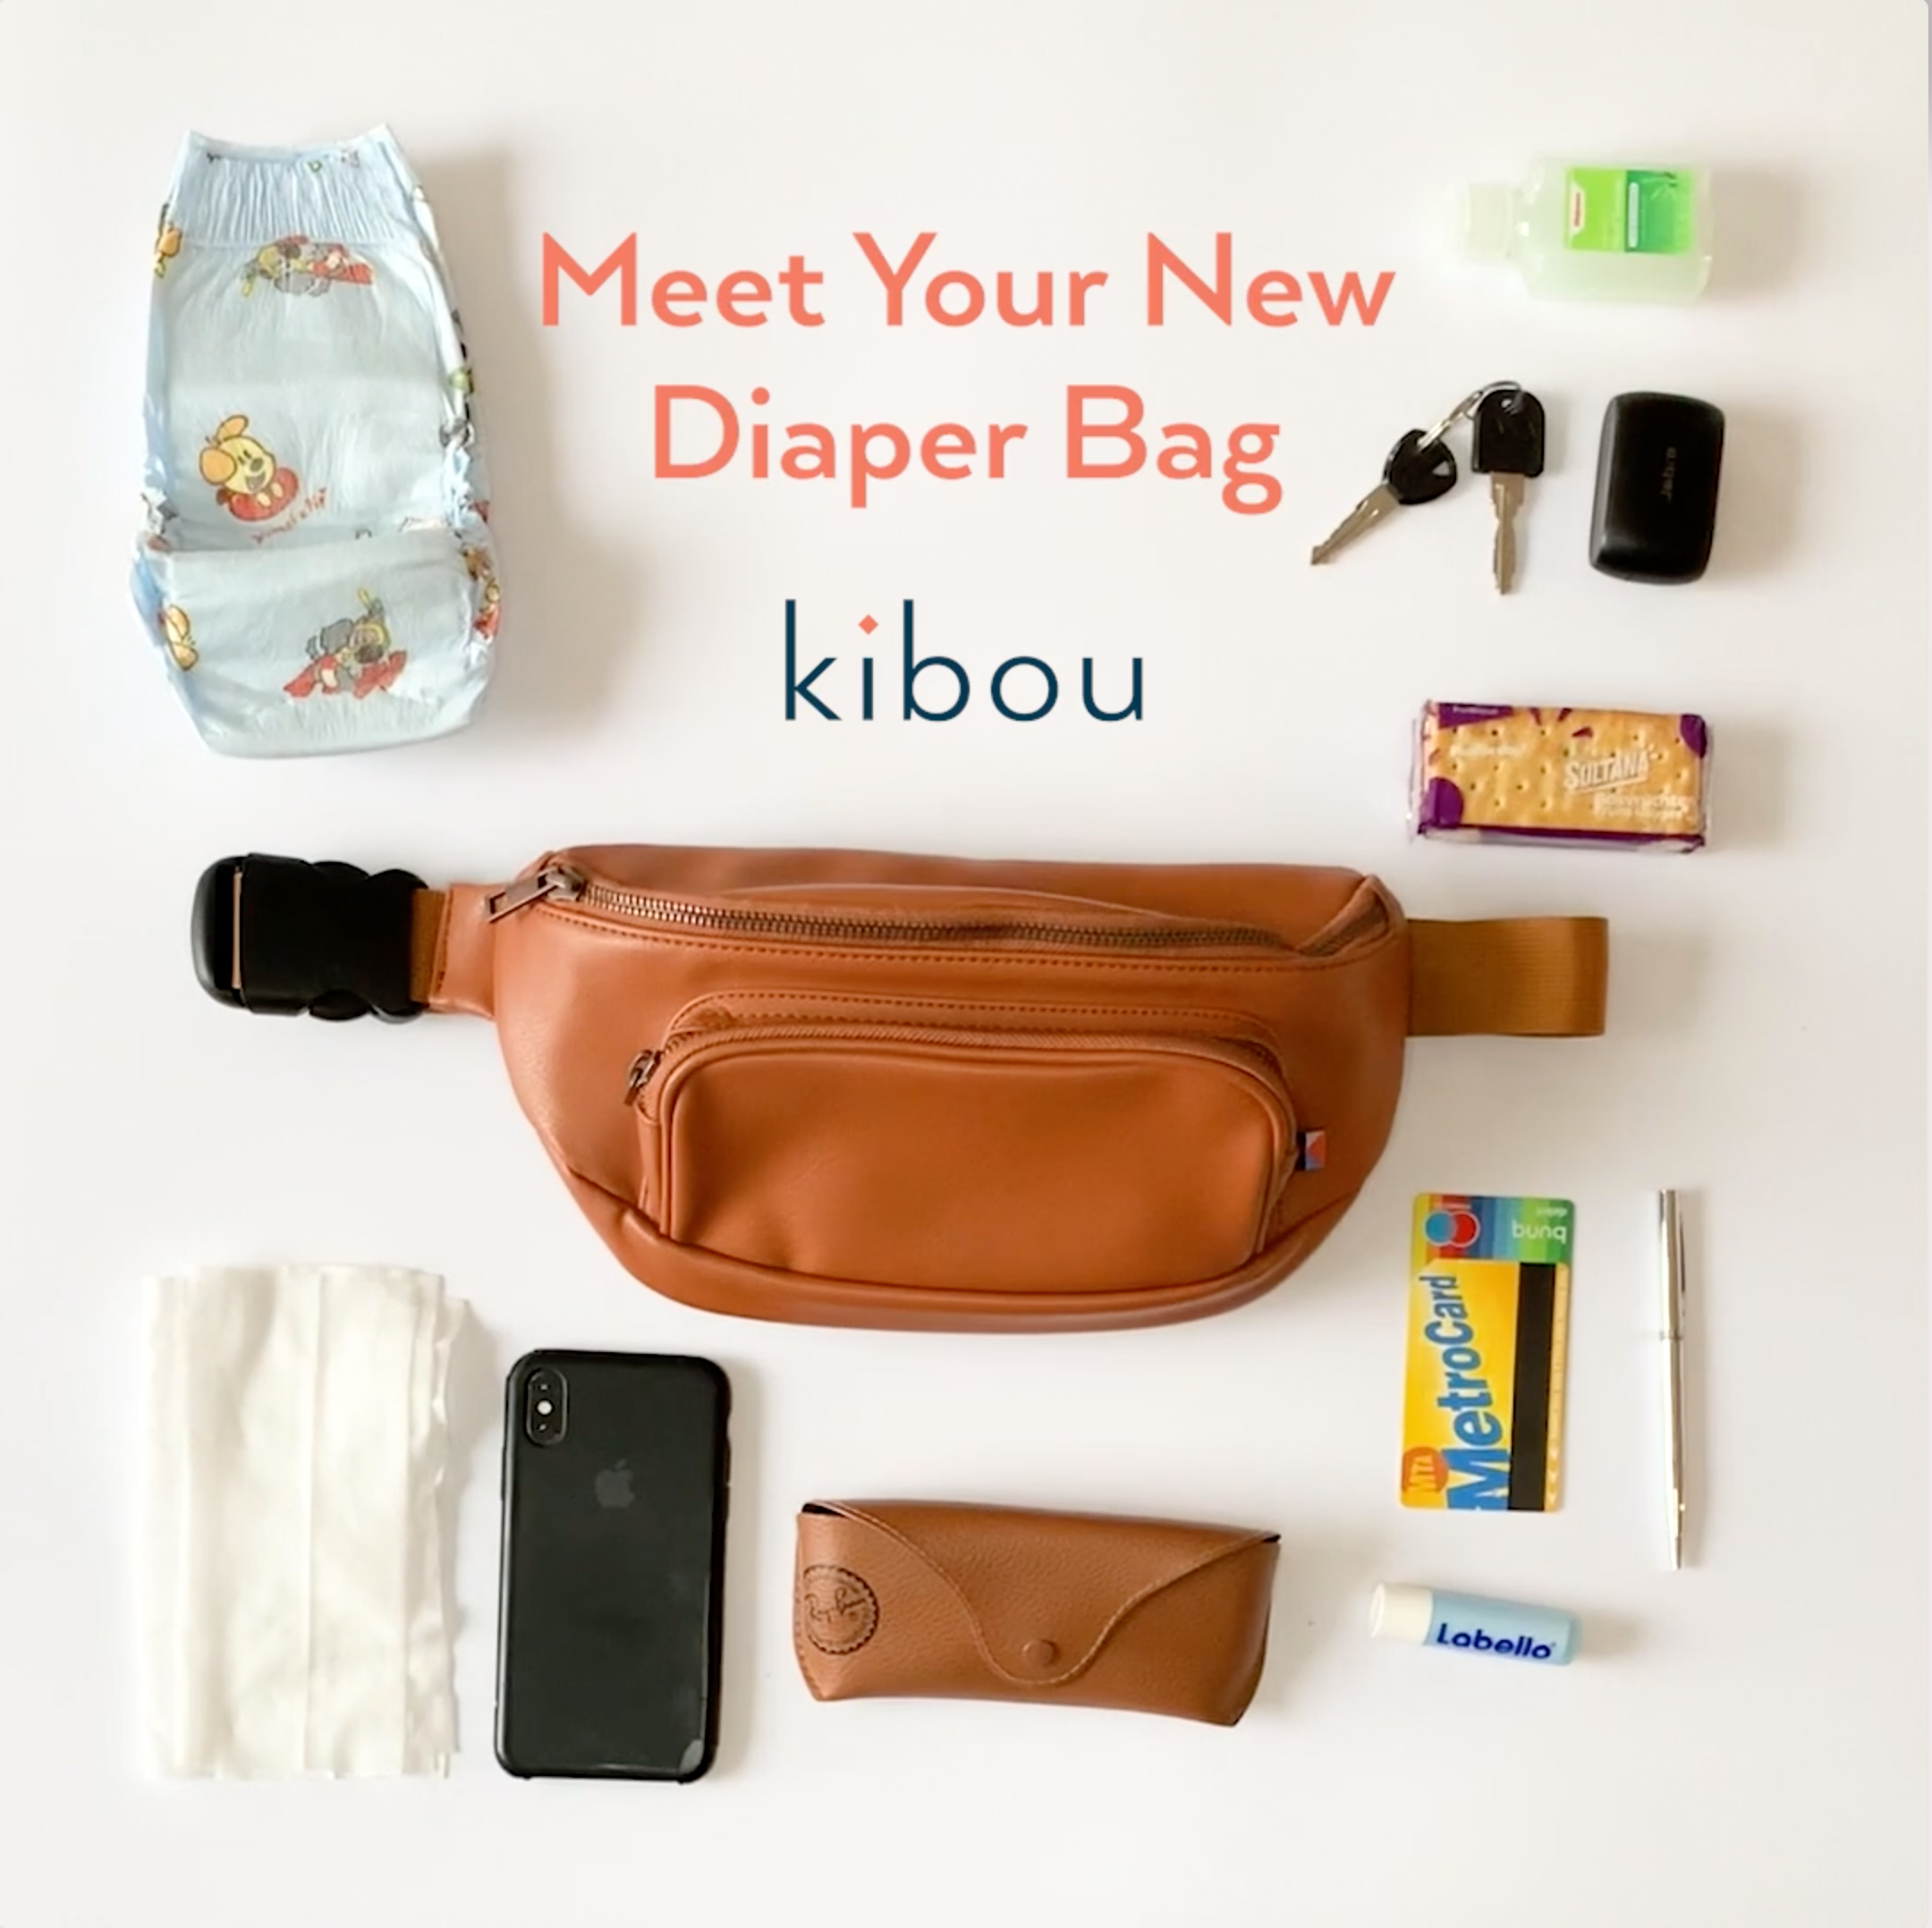 Kibou Bag - The Best Fanny Pack Diaper Bag